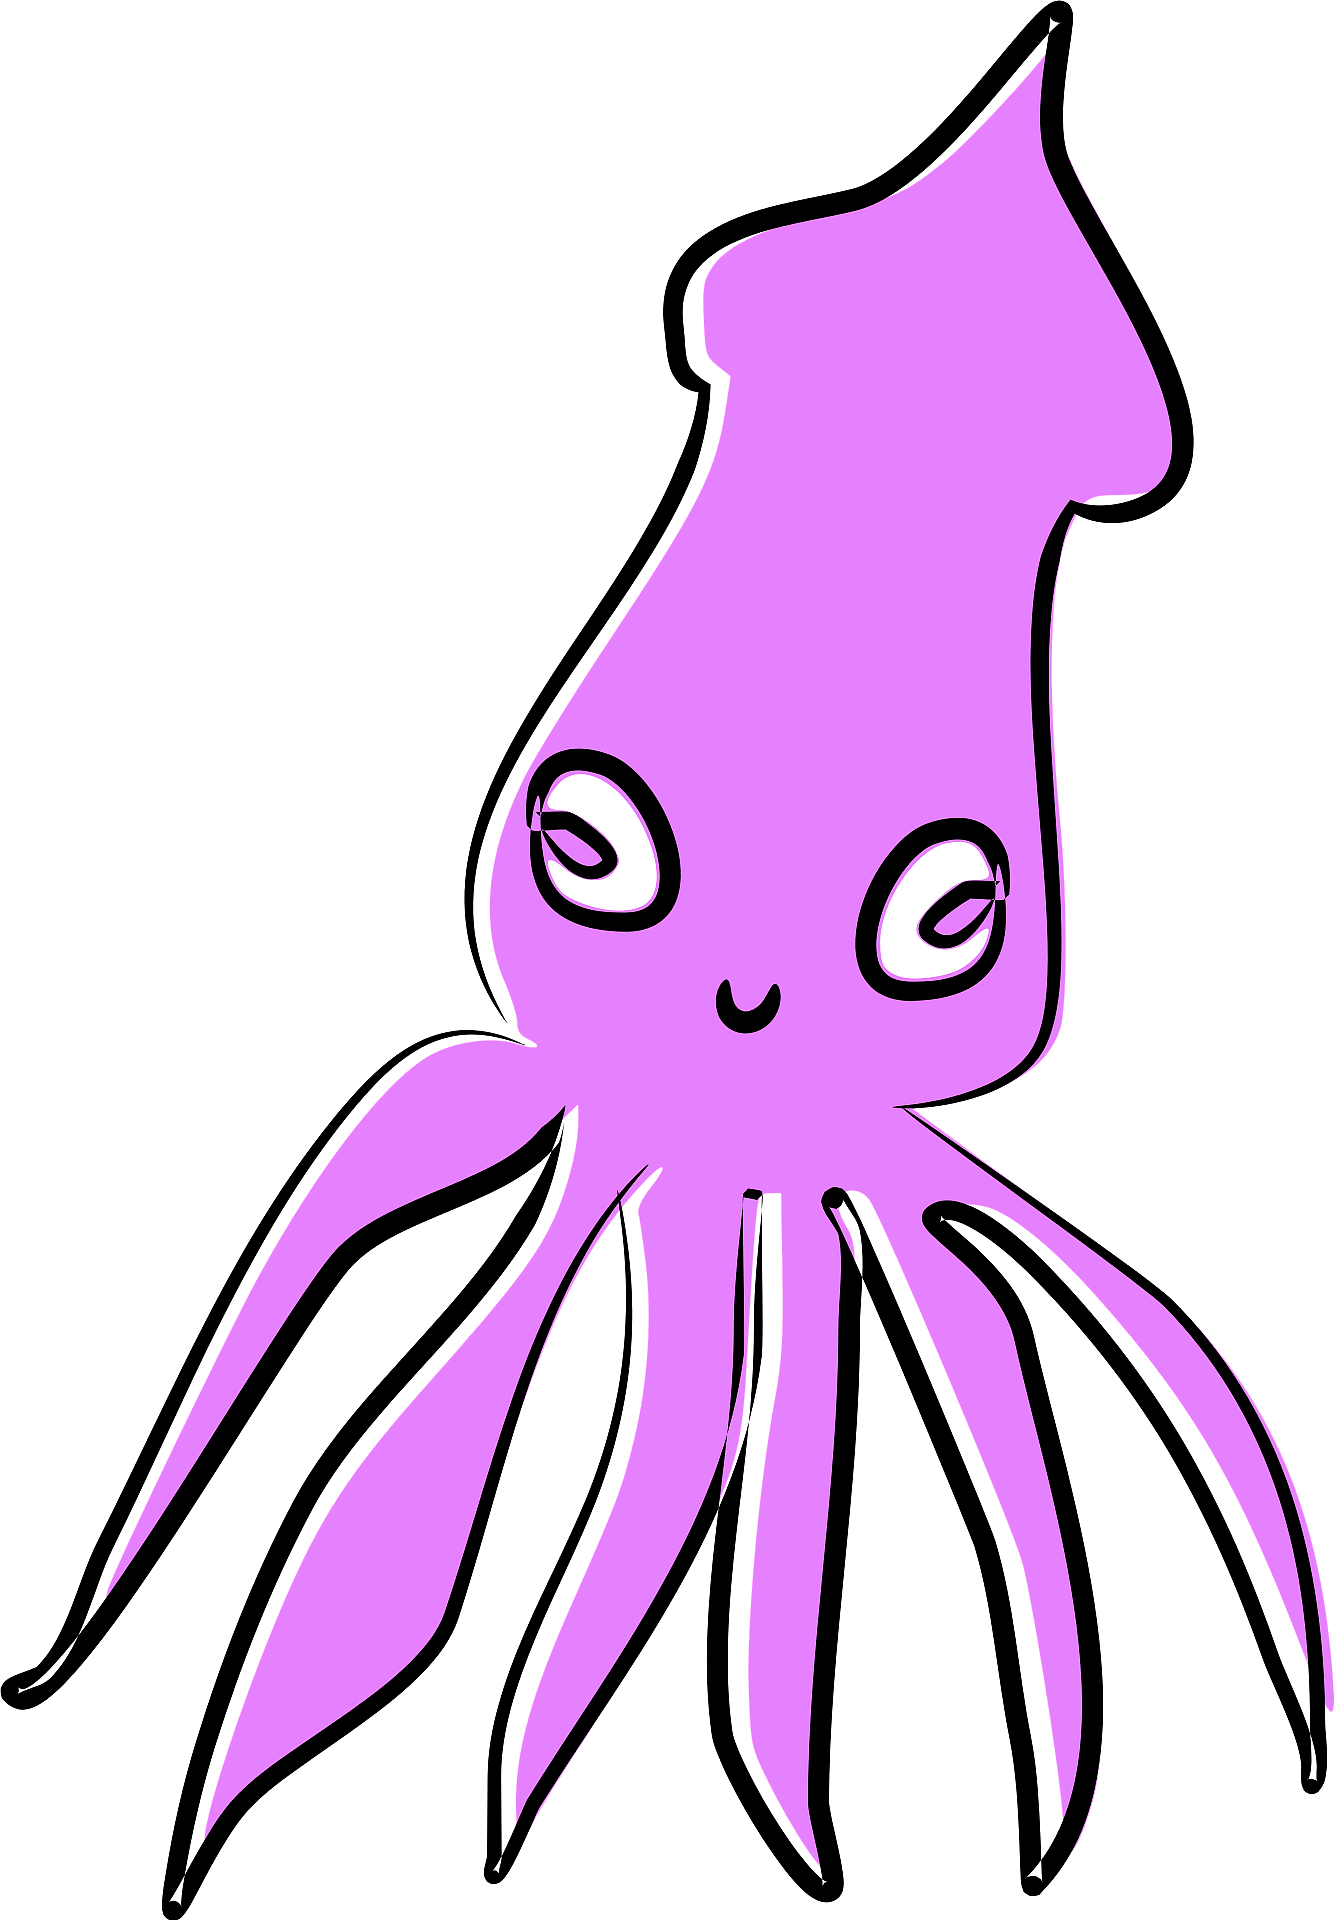 Fun fact! The creator of the Squid Girl anime is a splatoon fan! :  r/splatoon